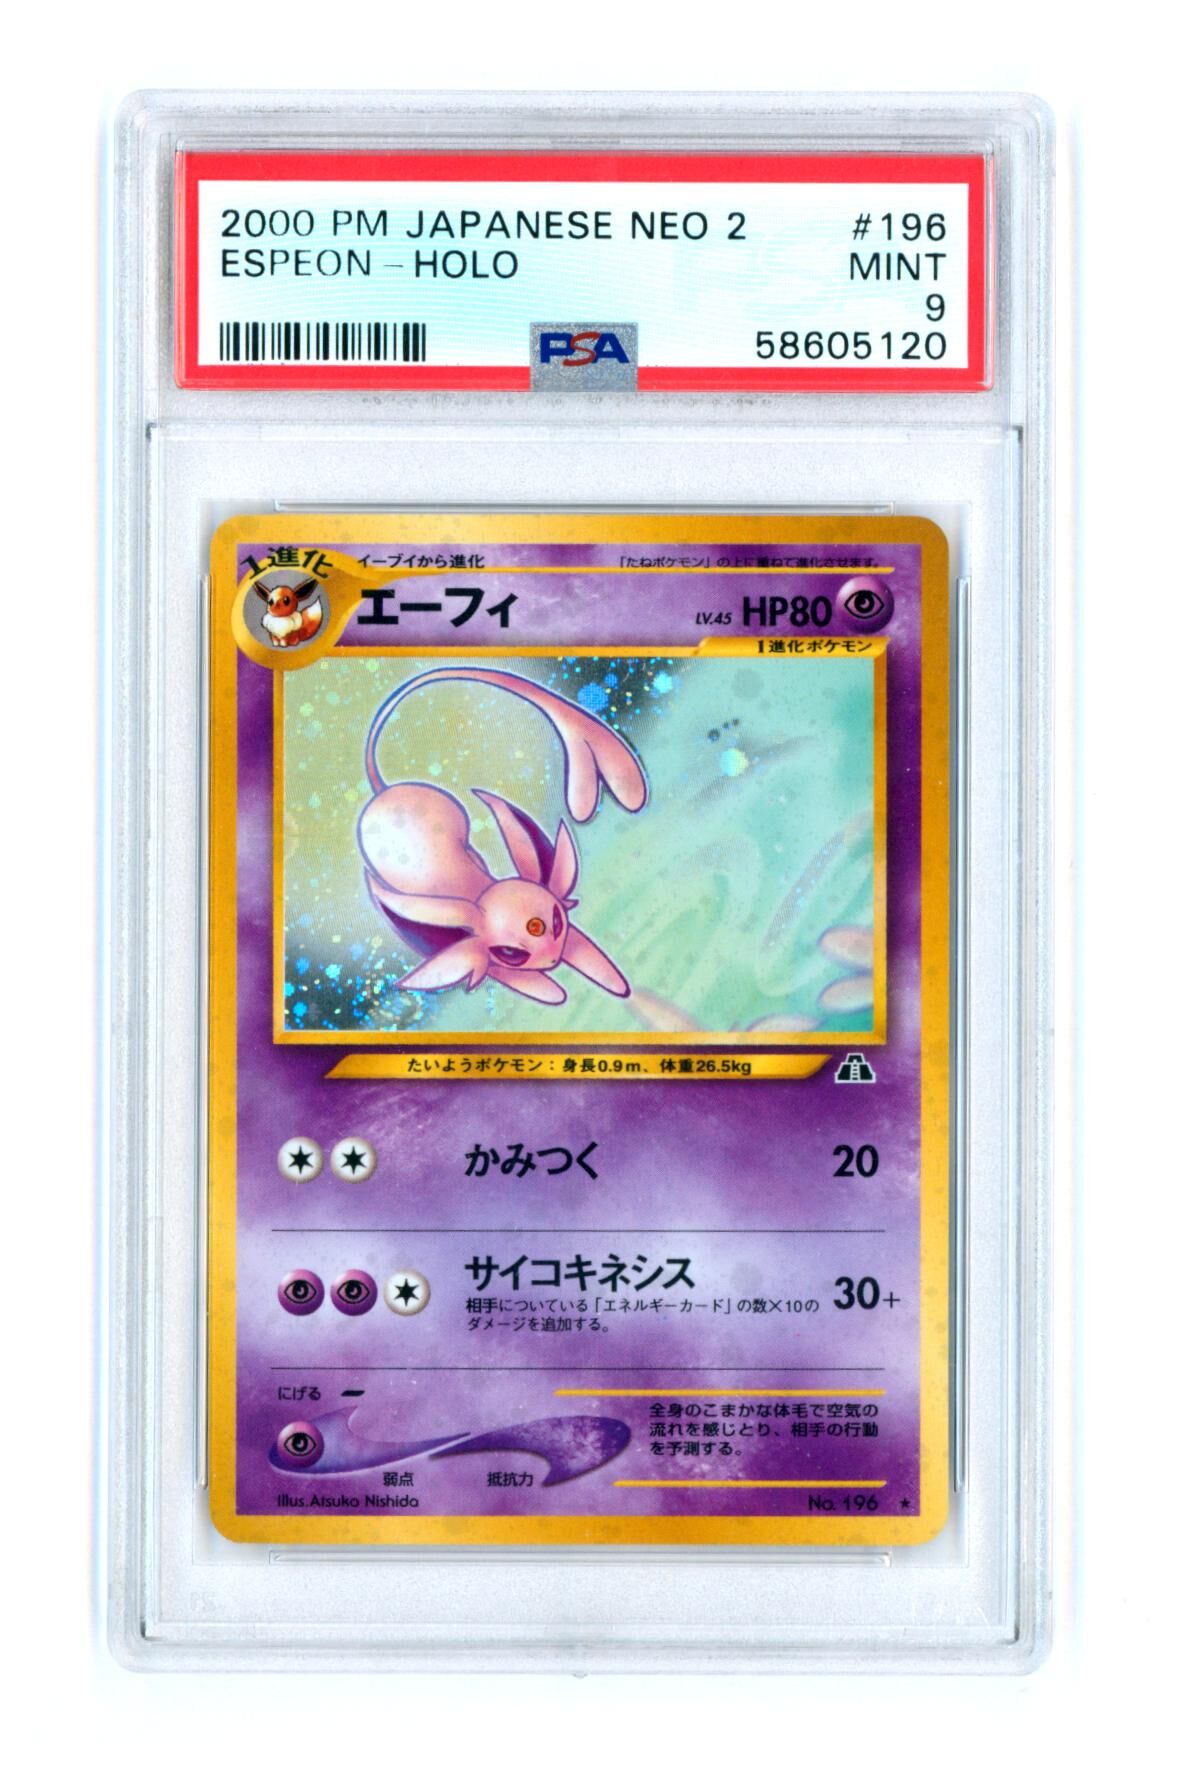 Espeon #196 - Japanese Neo 2 - Holo - PSA 9 MINT - Pokémon